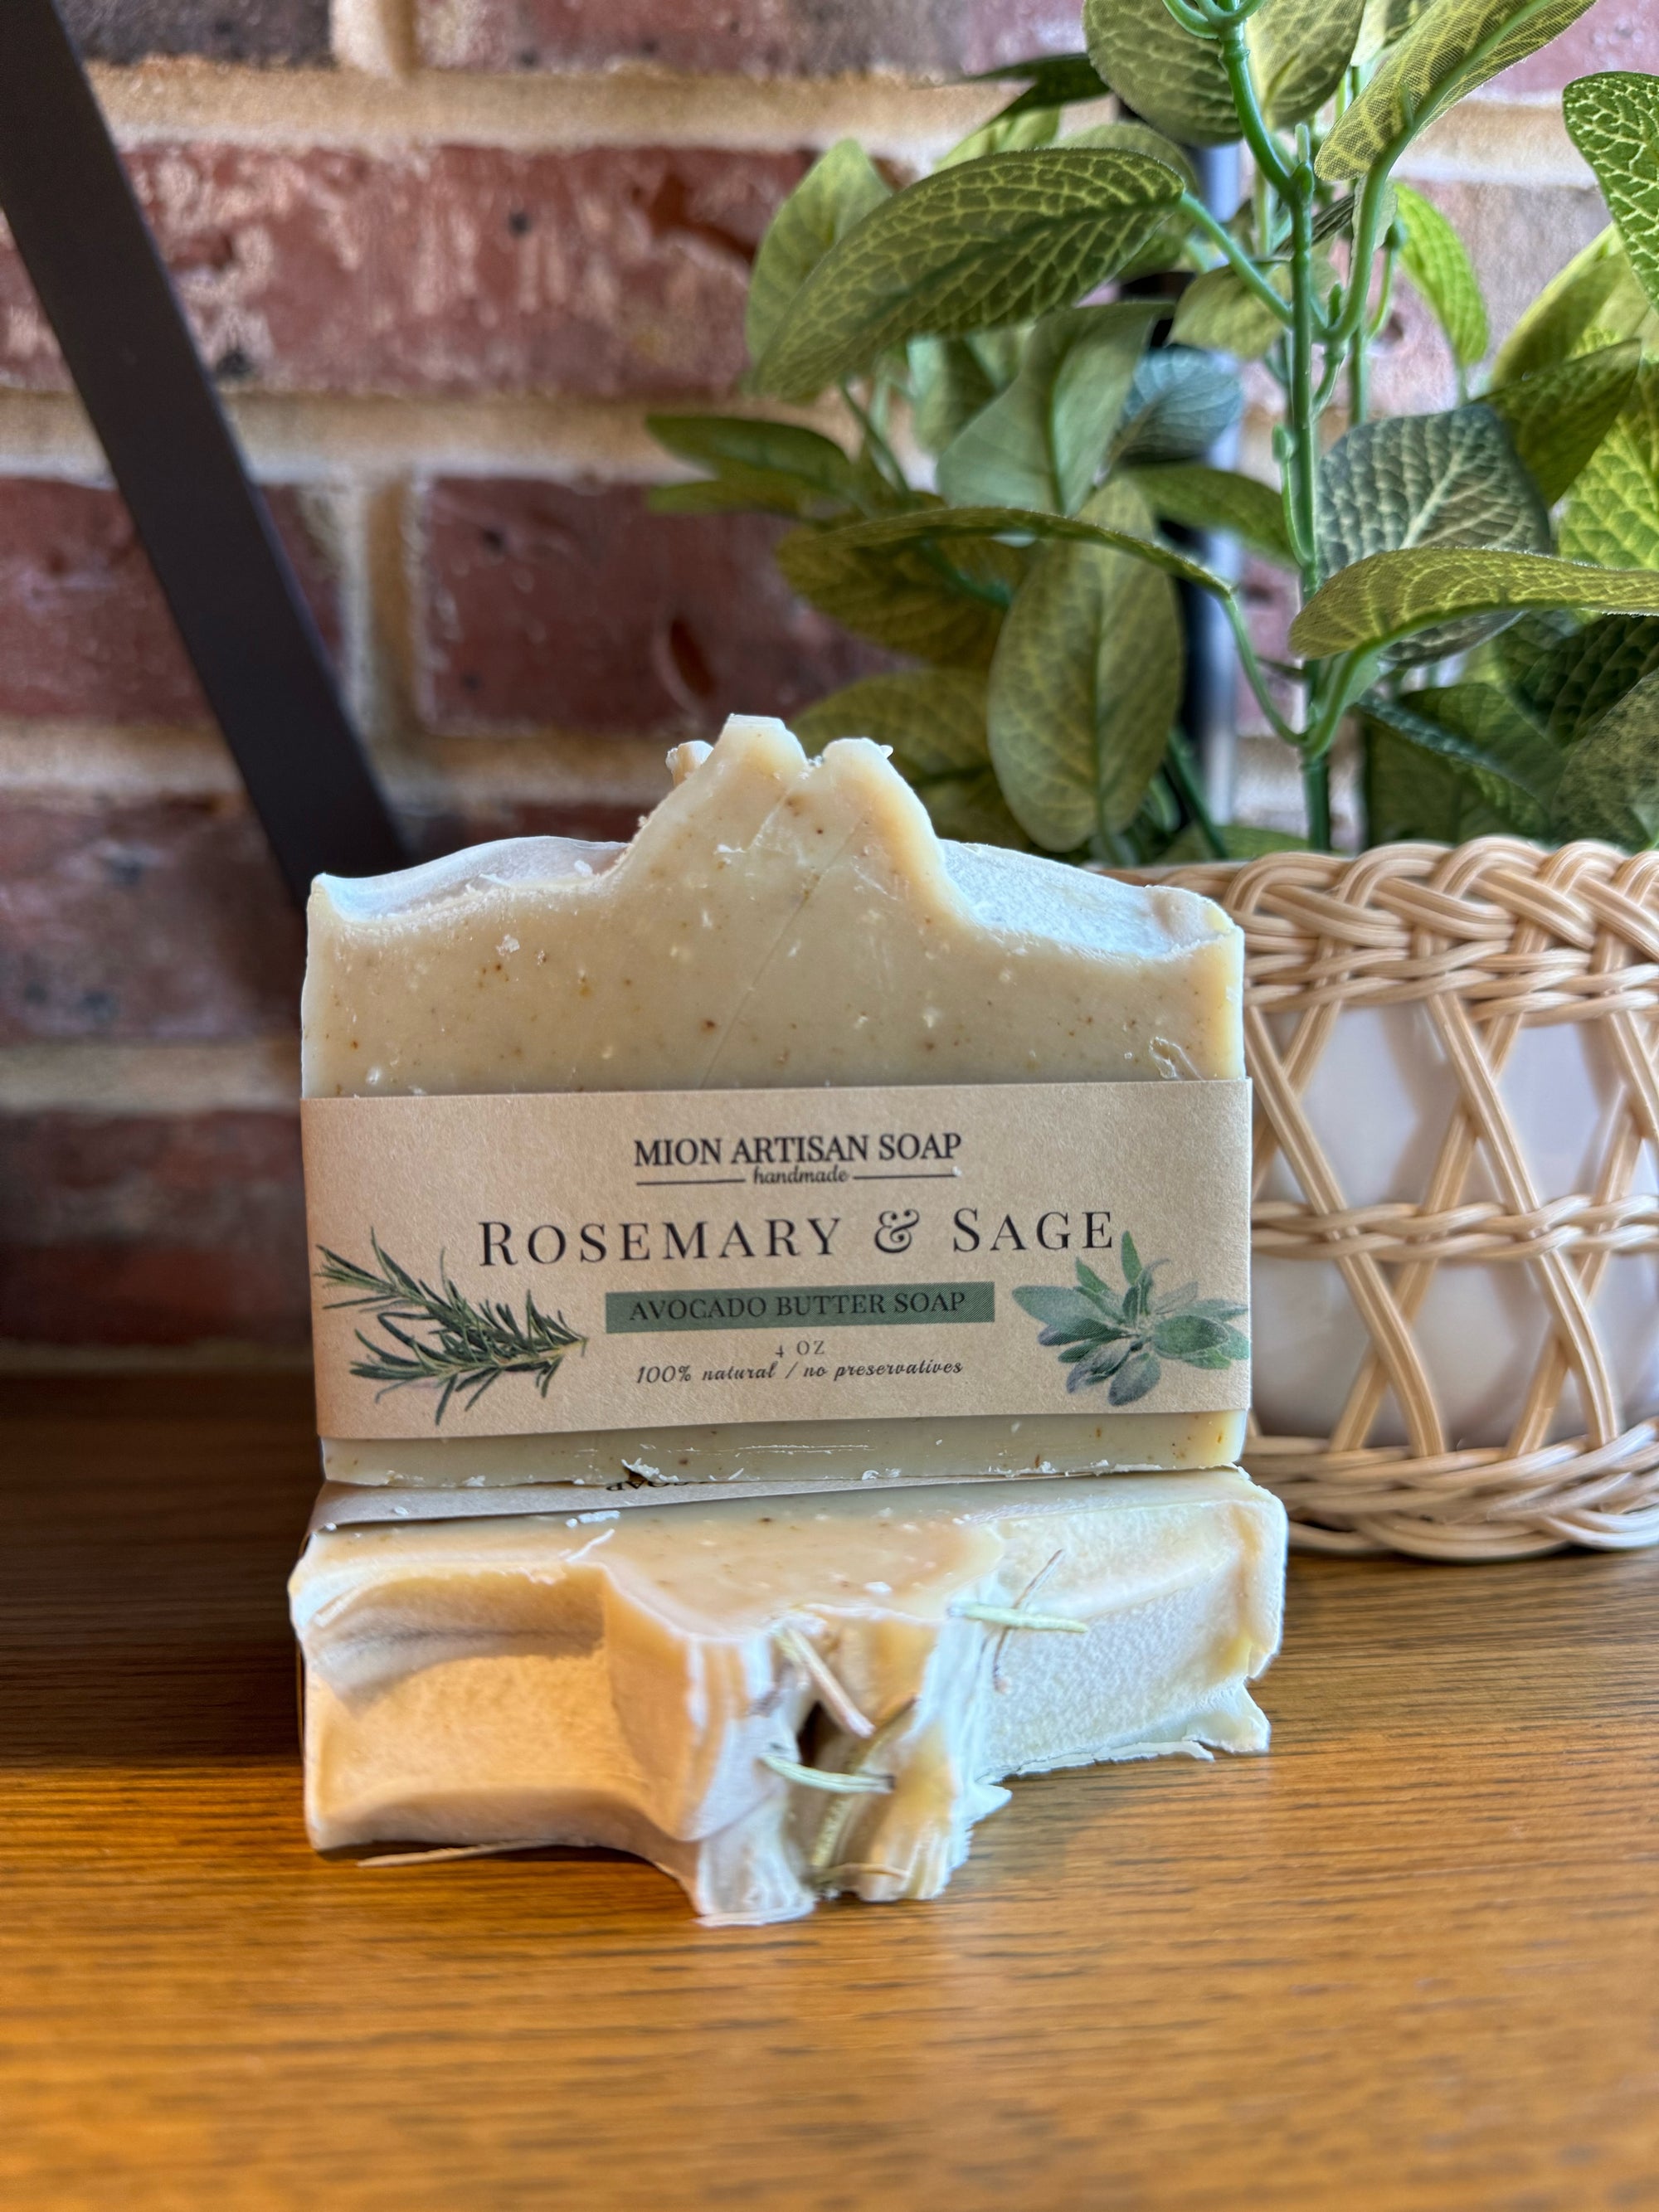 Rosemary & Sage | Avocado Butter Soap